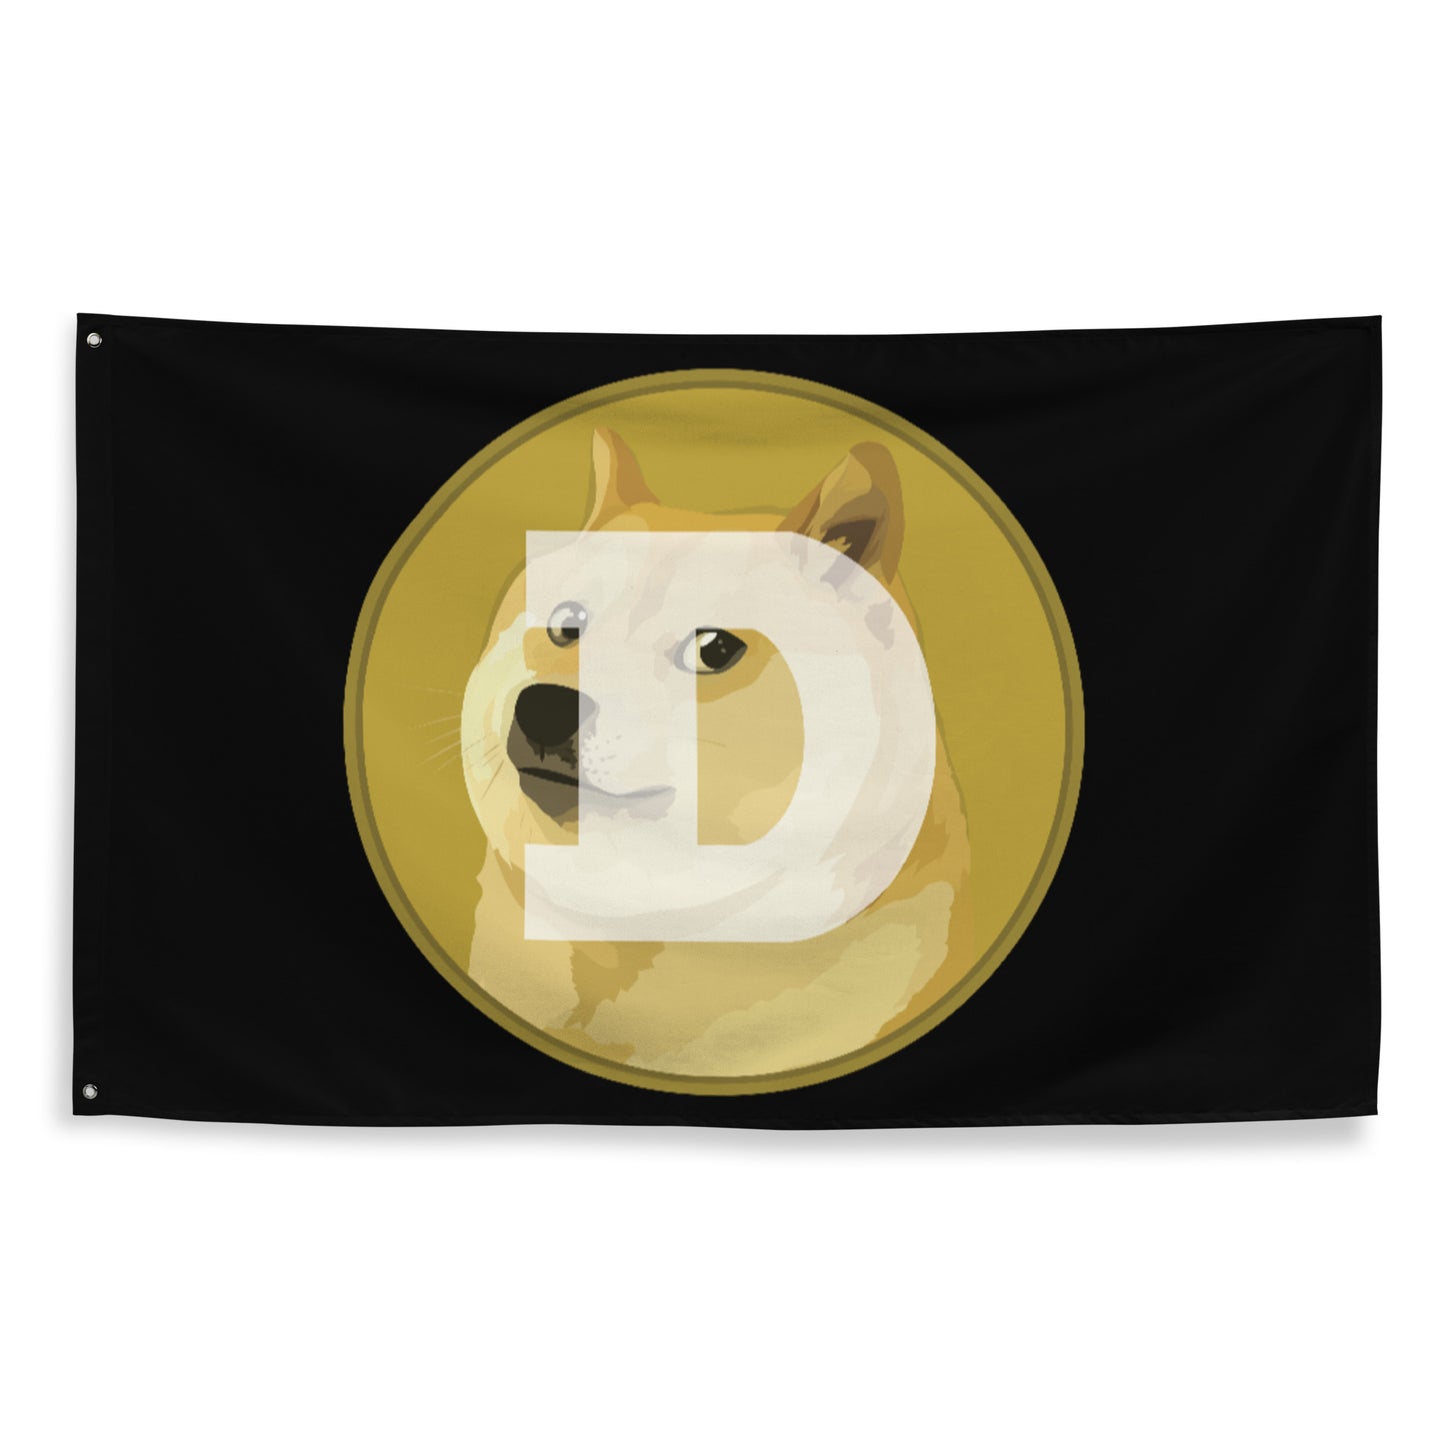 DOGE LOGO FLAG (V1) - Black